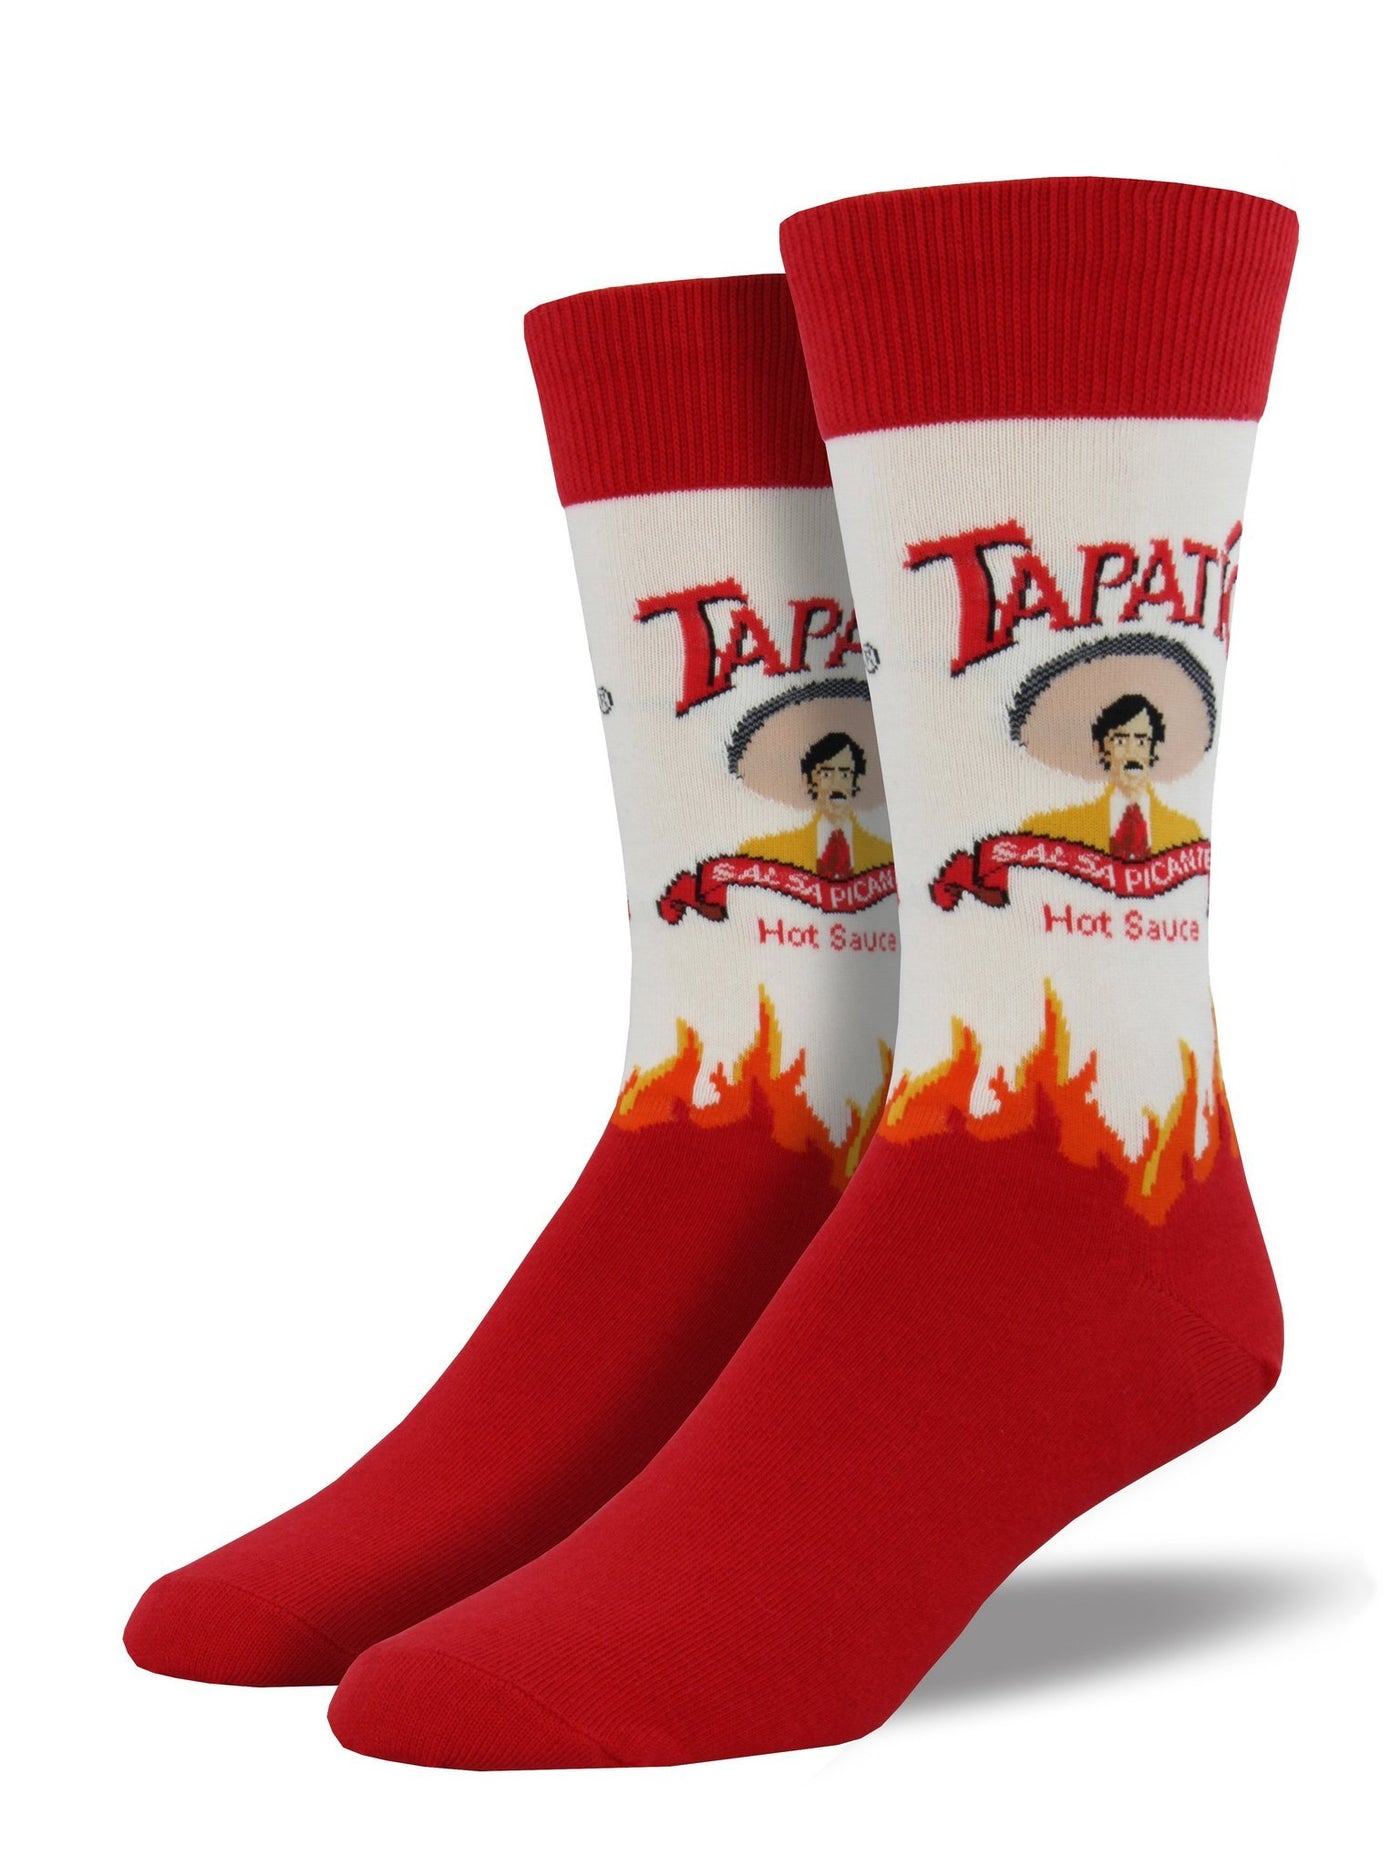 Tapatio Hot Sauce Socks for Men by Socksmith